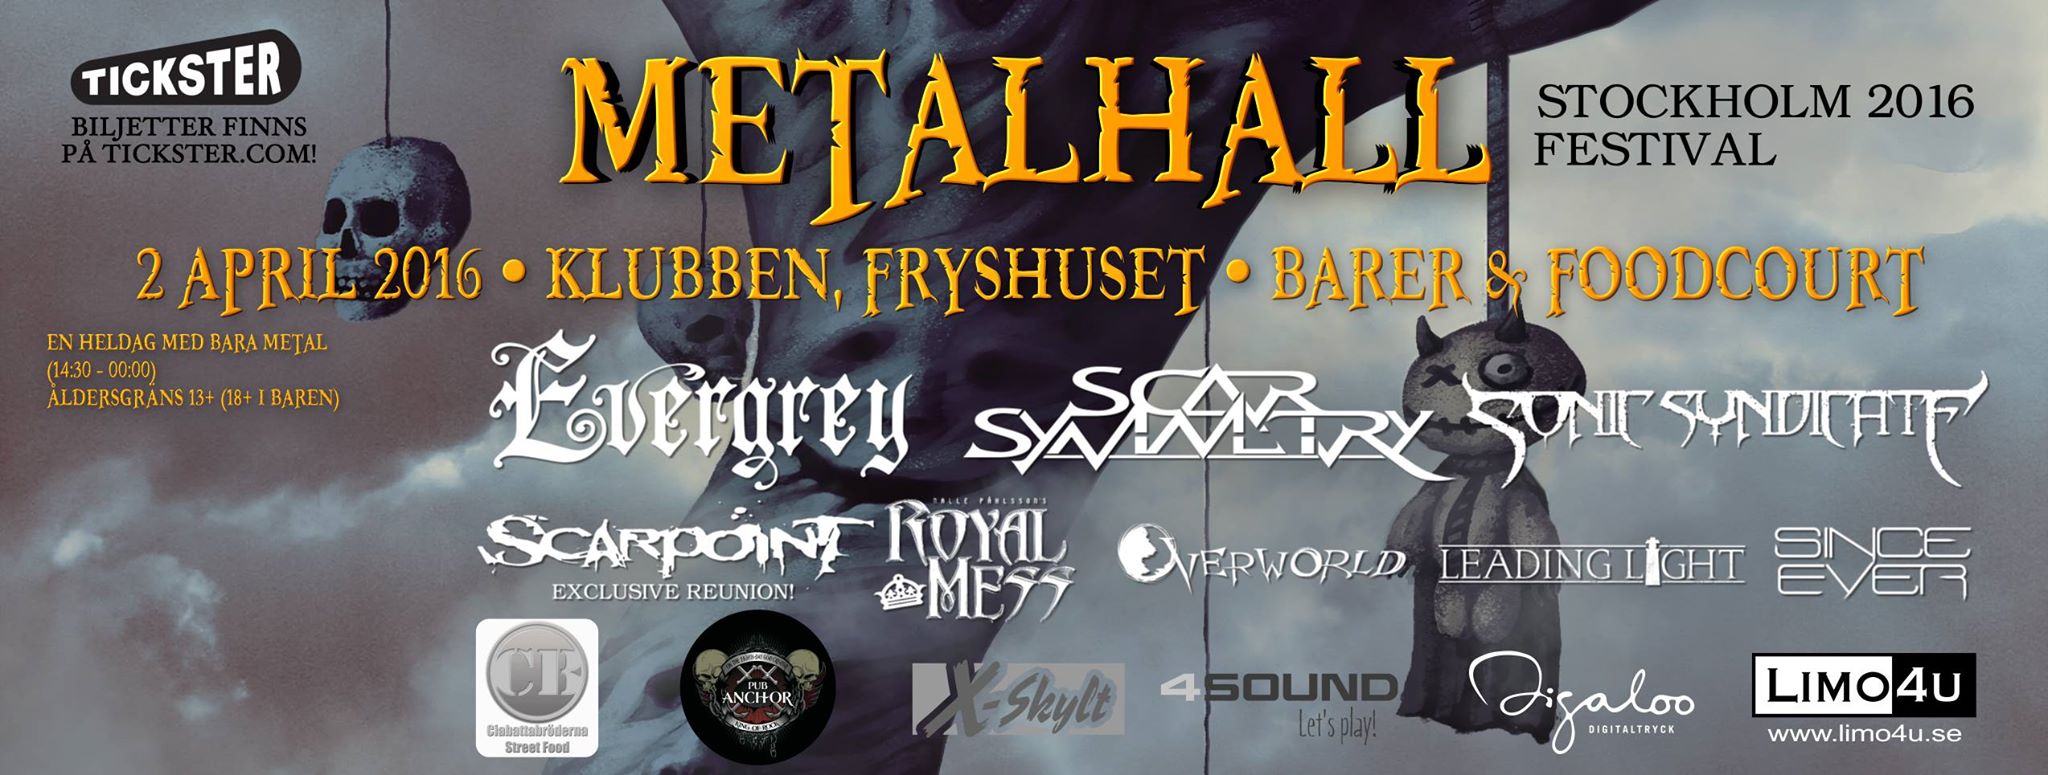 MetalHall 2016